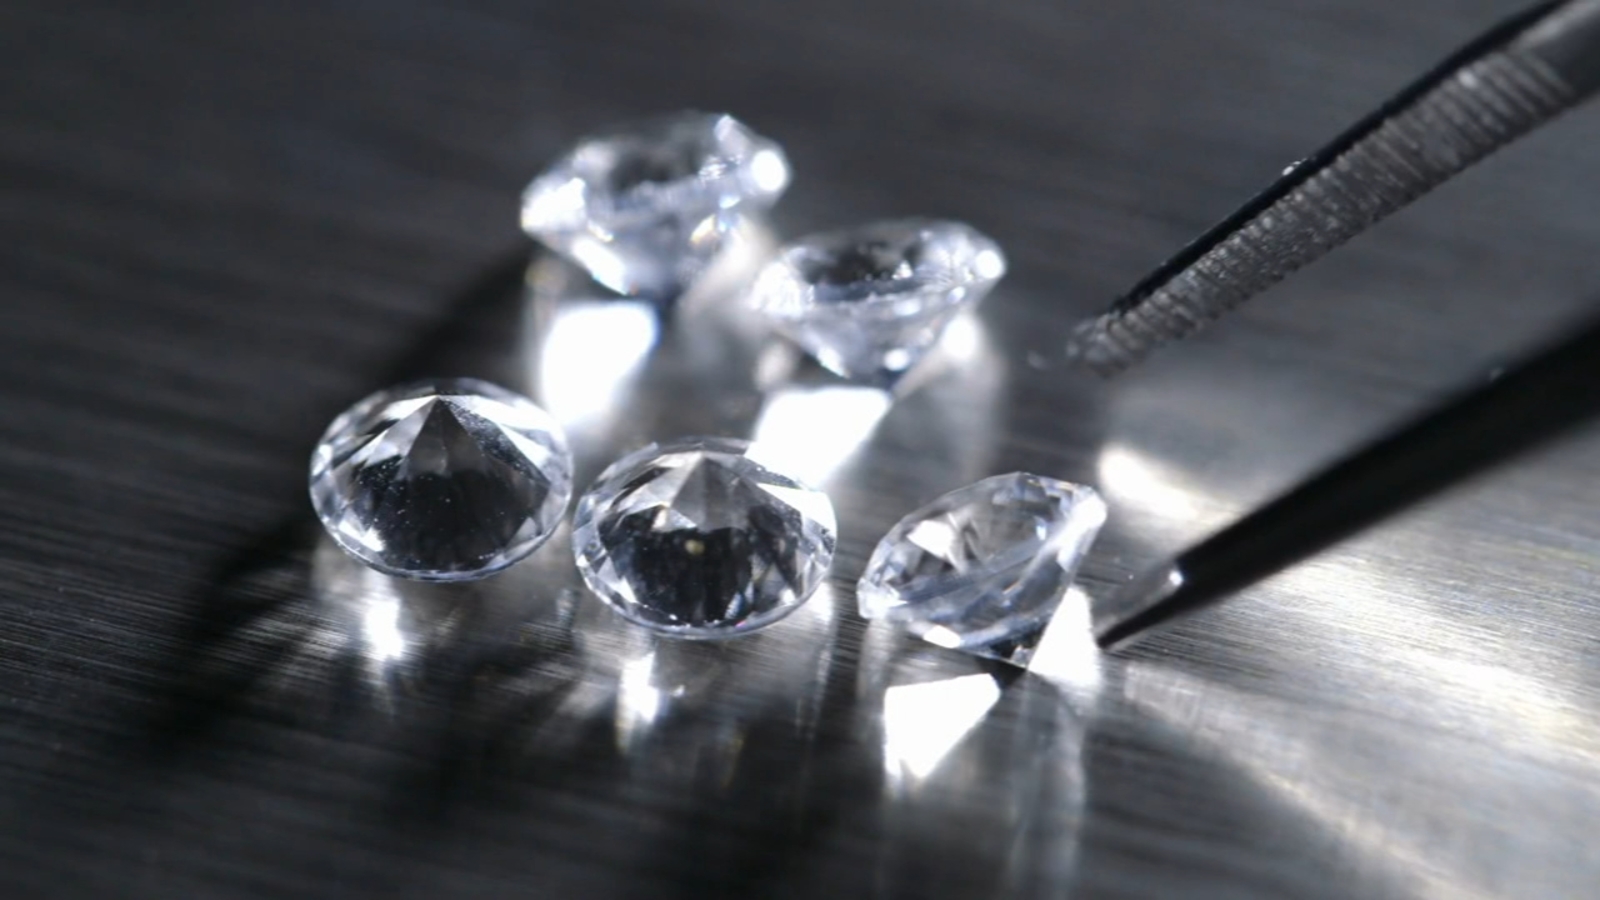 Rarecarat-All About the Lab Grown Vs Real Diamonds